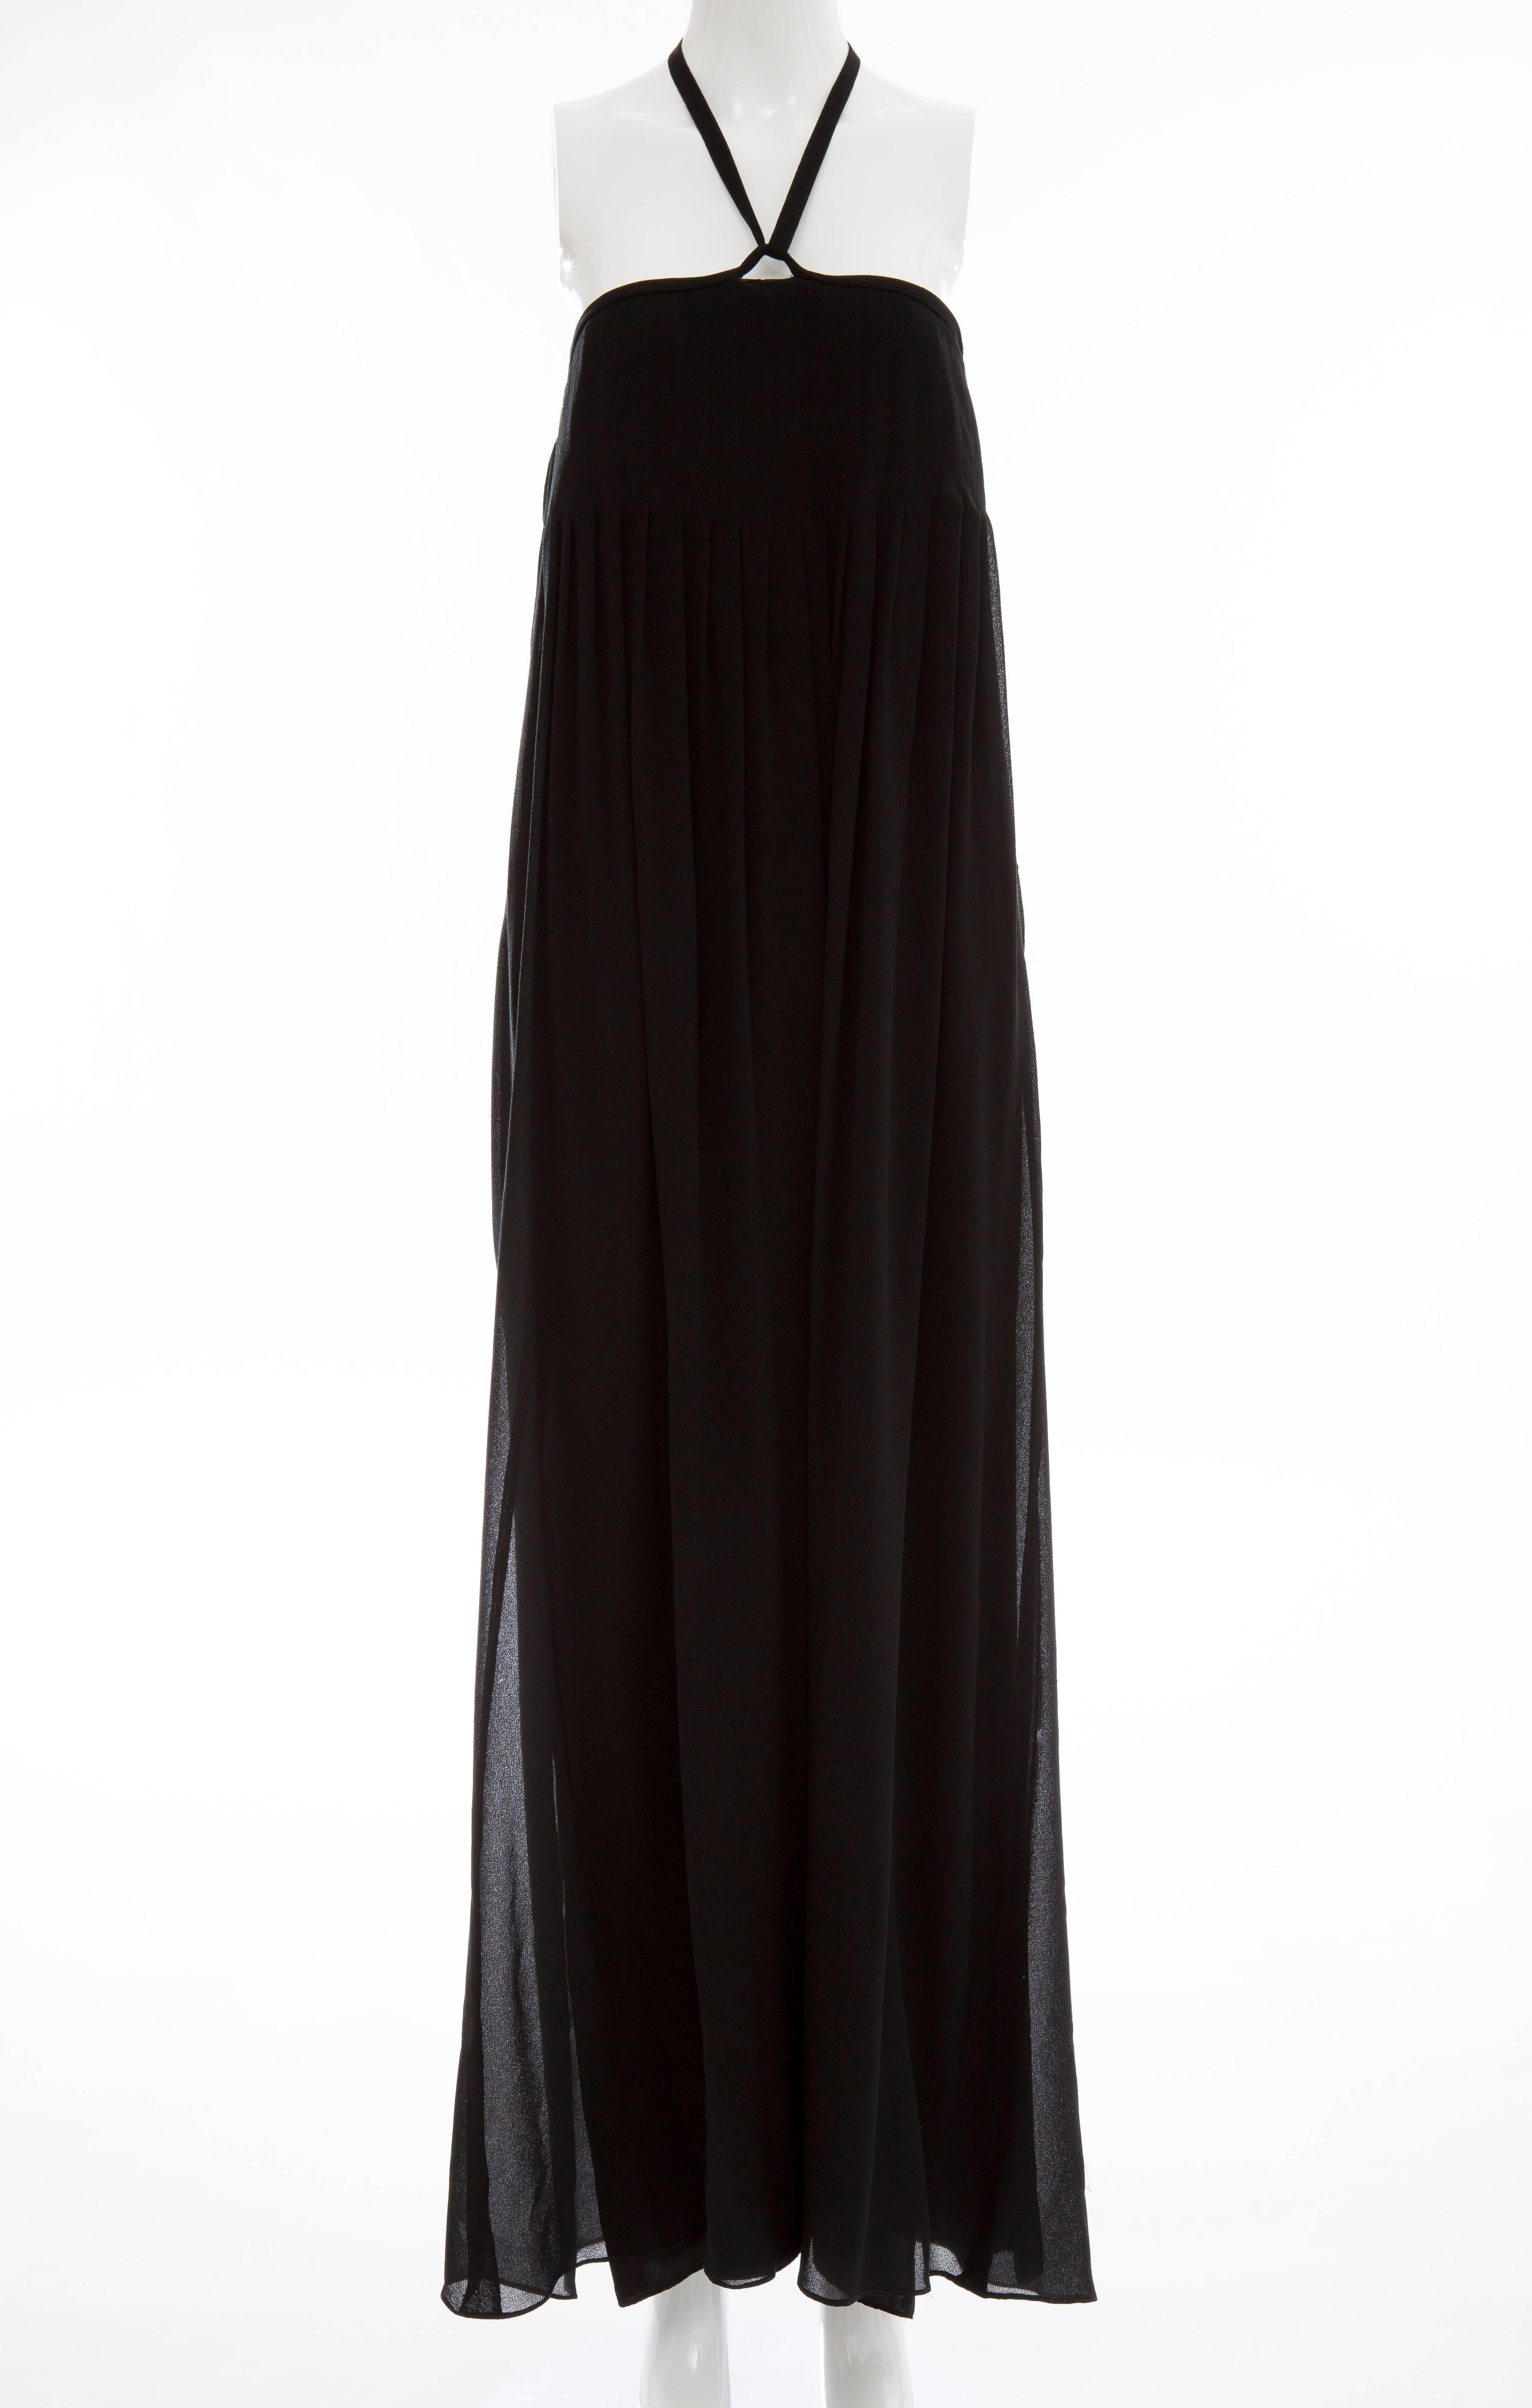 Bill Blass Black Nun's Cloth Strapless Evening Dress, Circa 1970's For Sale 1